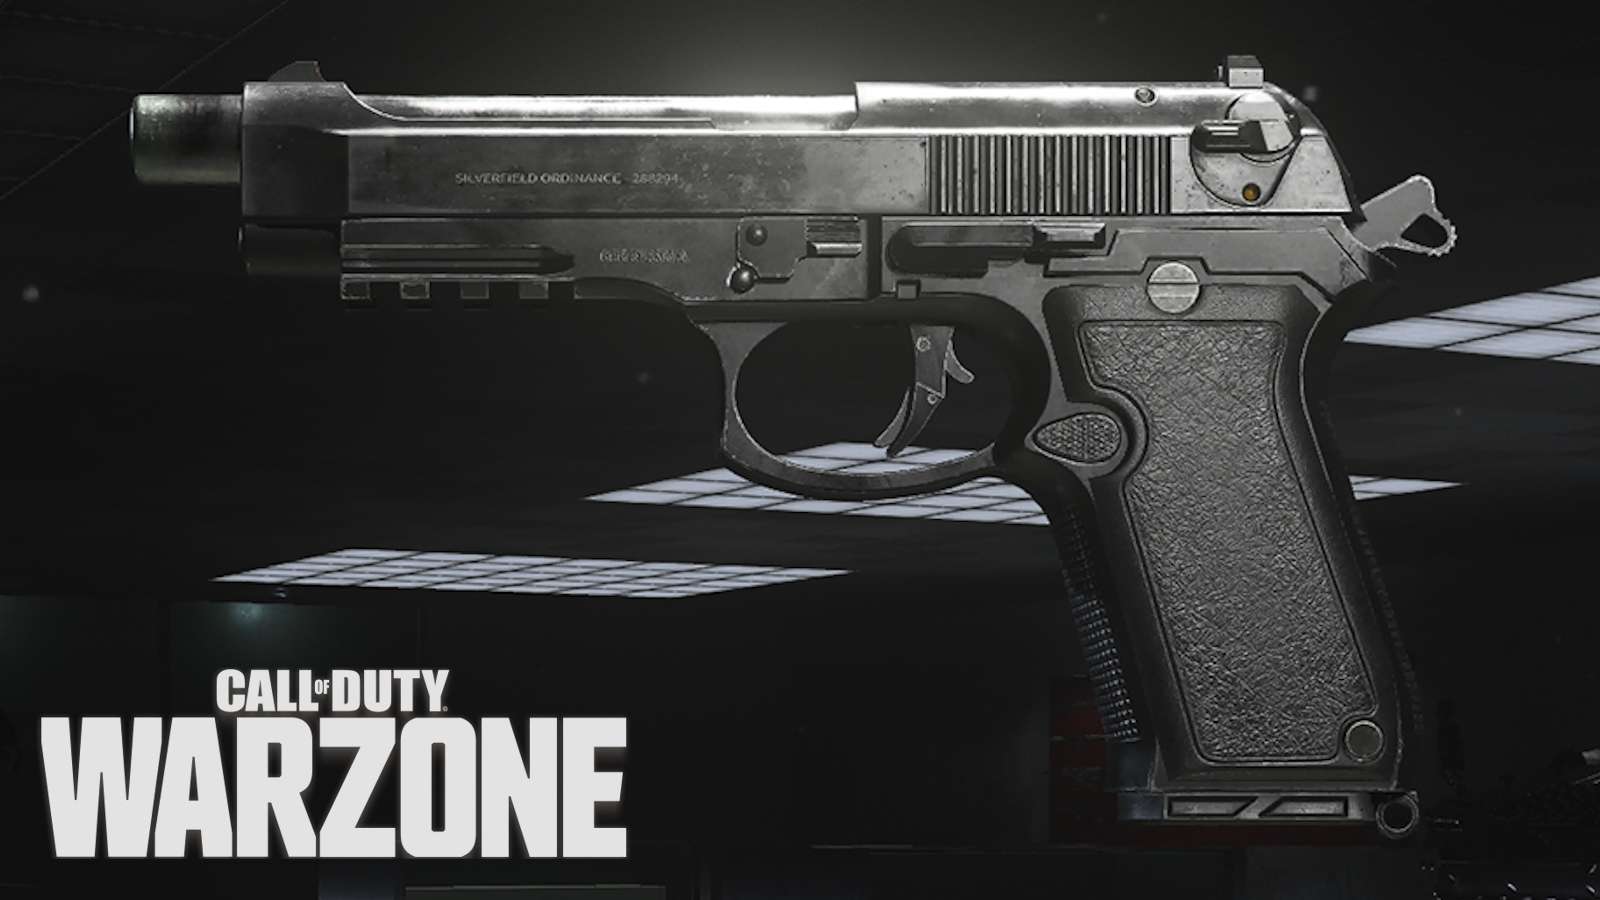 Renetti pistol with Warzone logo.